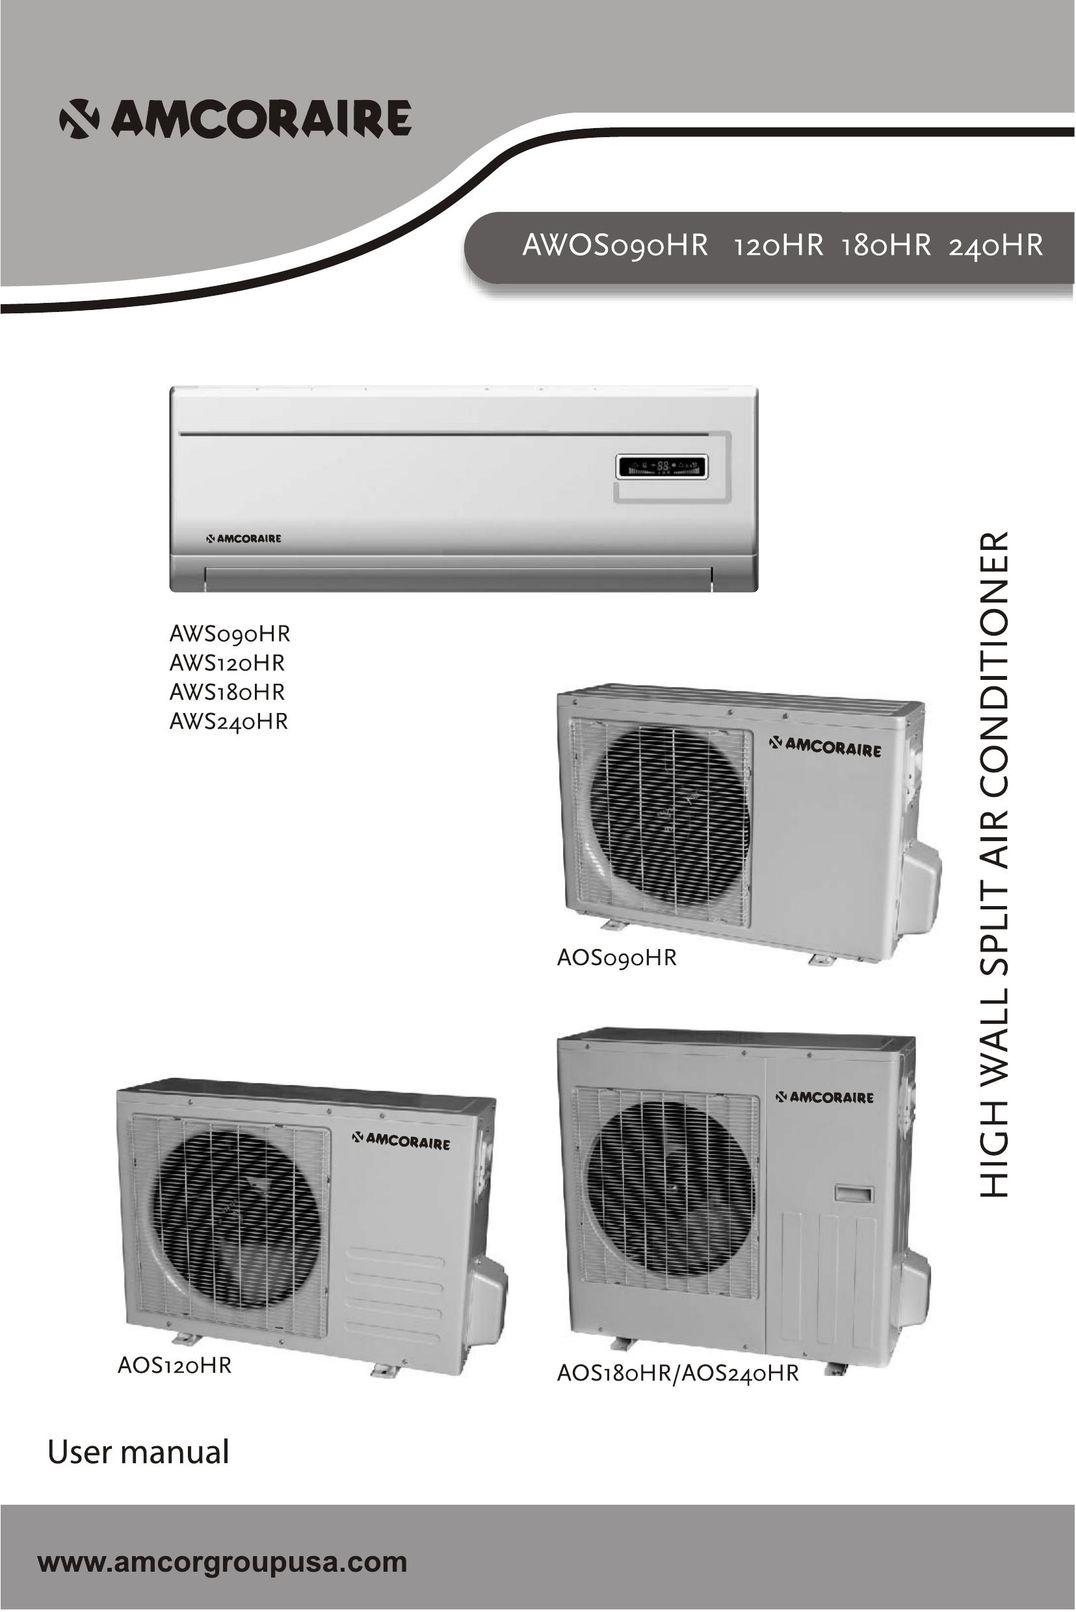 Amcor AOS120HR Air Conditioner User Manual